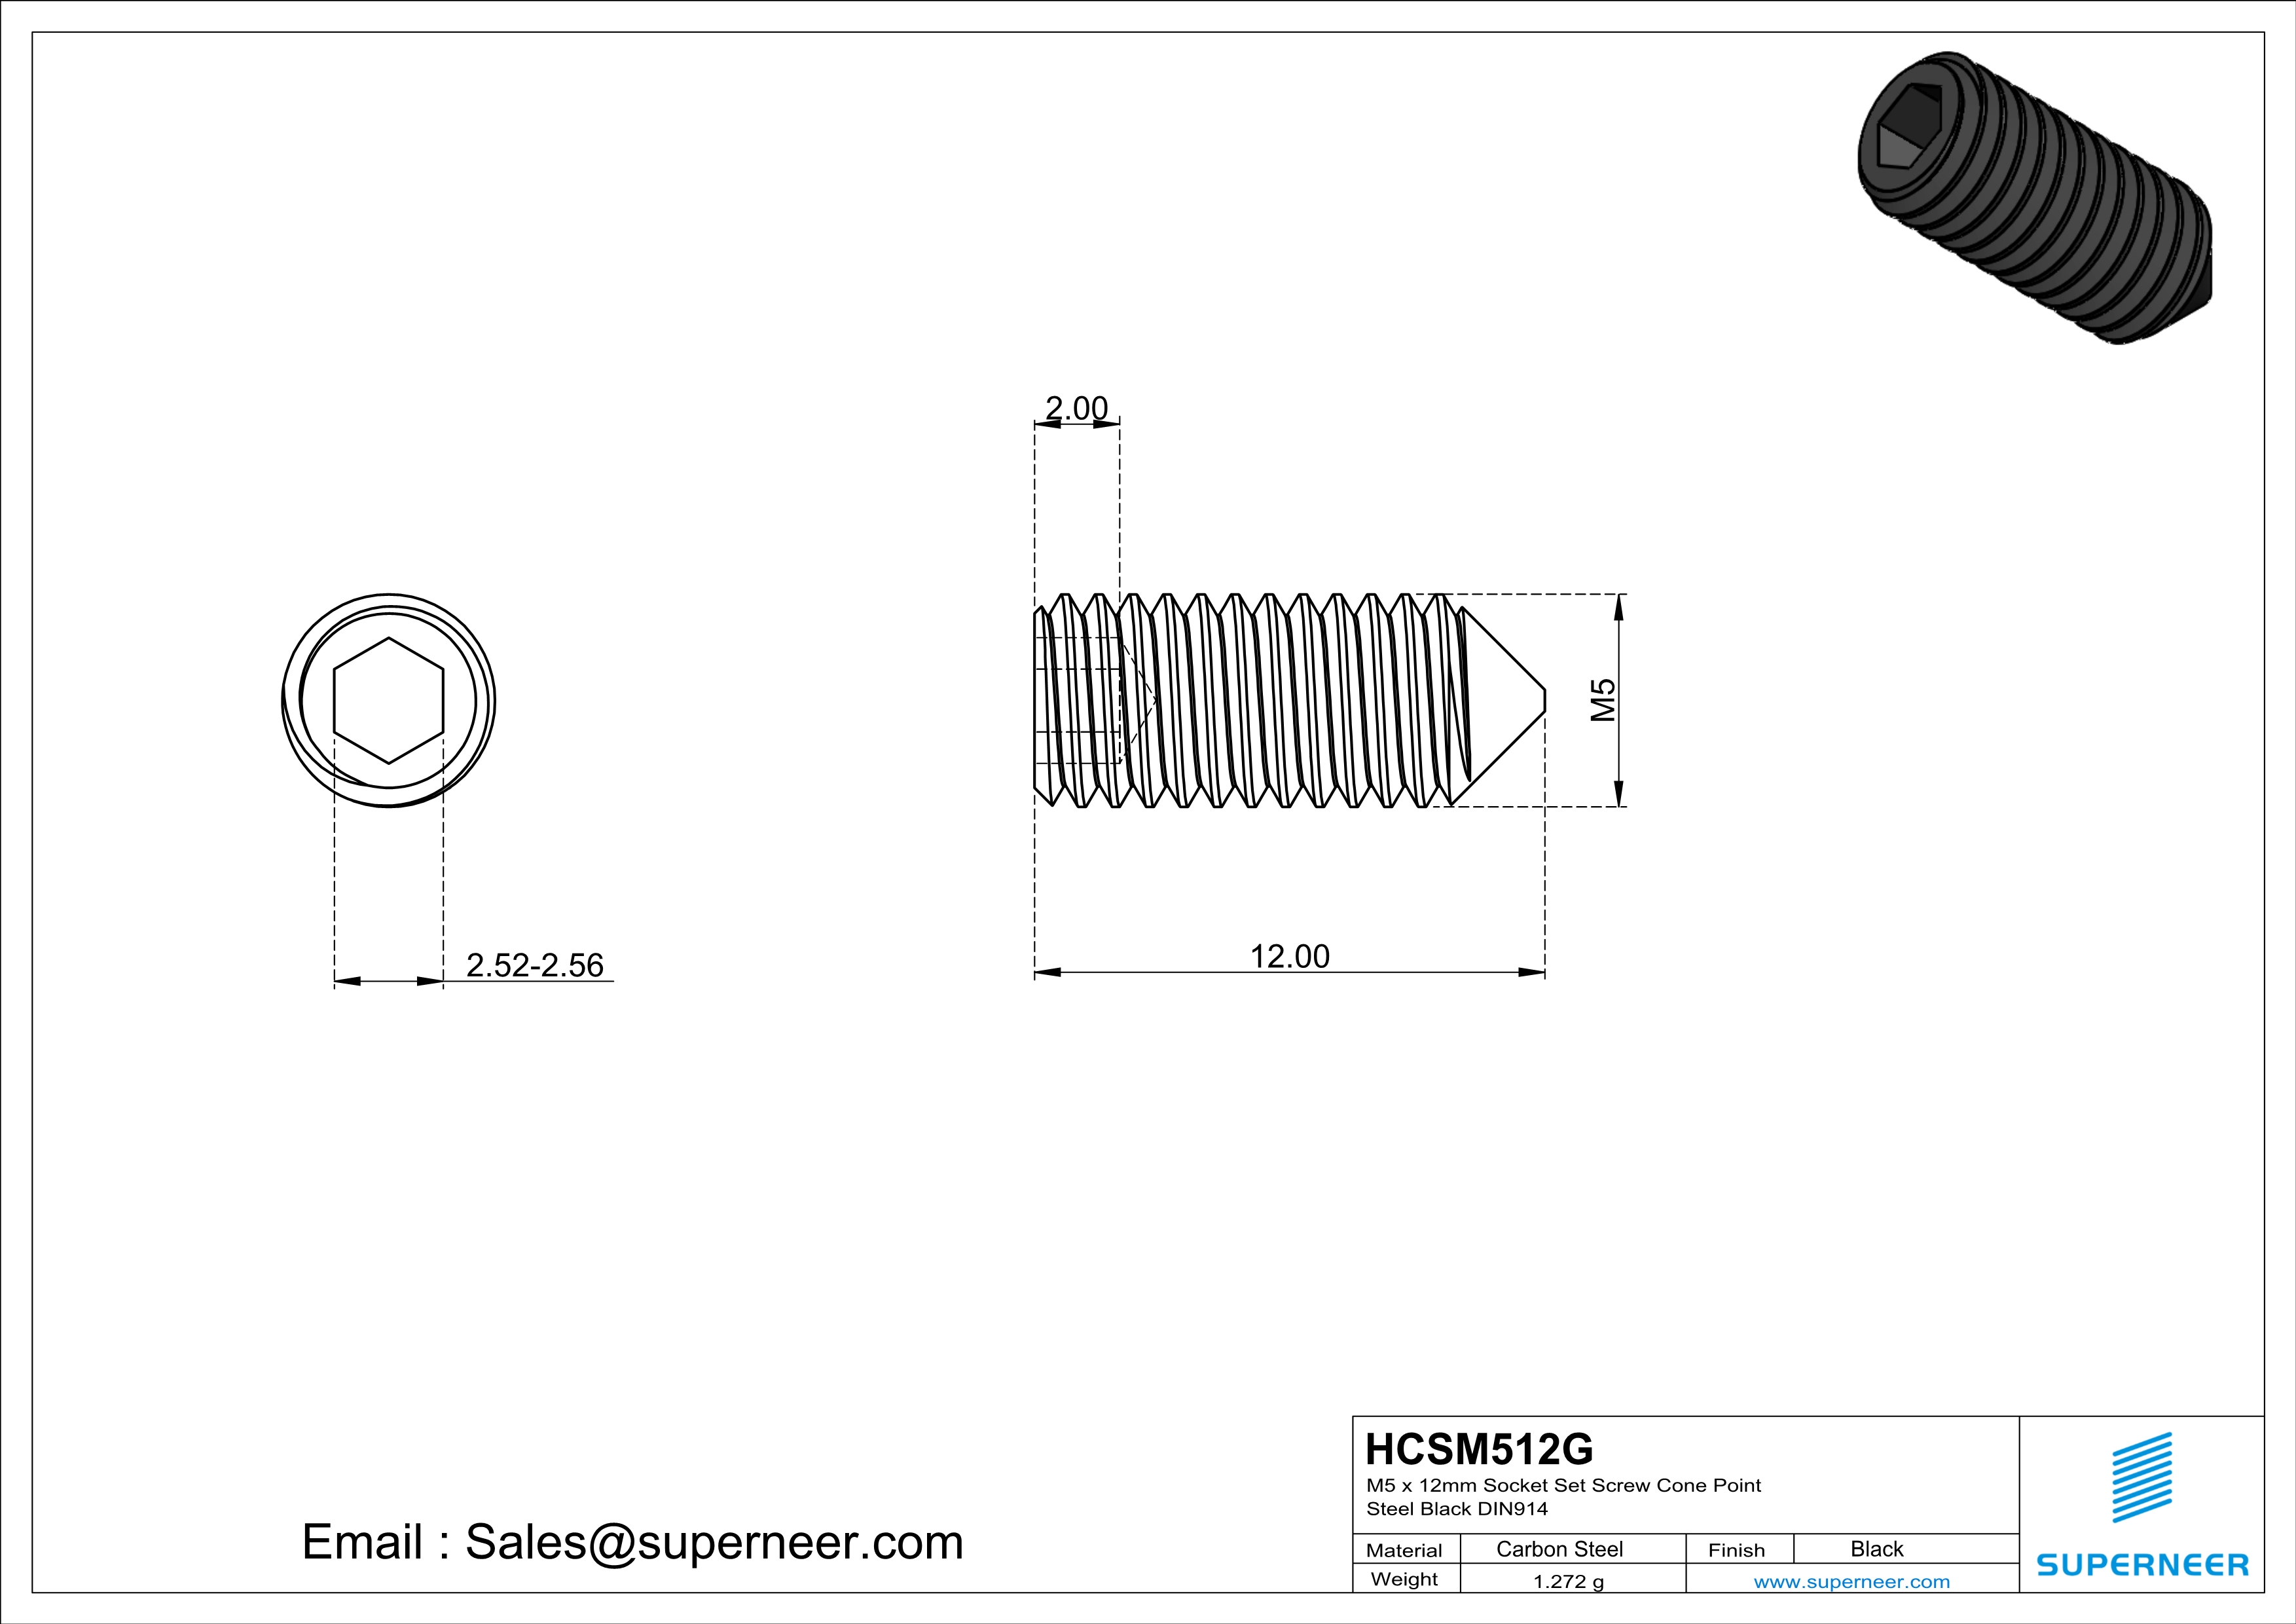 M5 x 12mm Socket Set Screw Cone Point 12.9 Carbon Steel Black DIN914